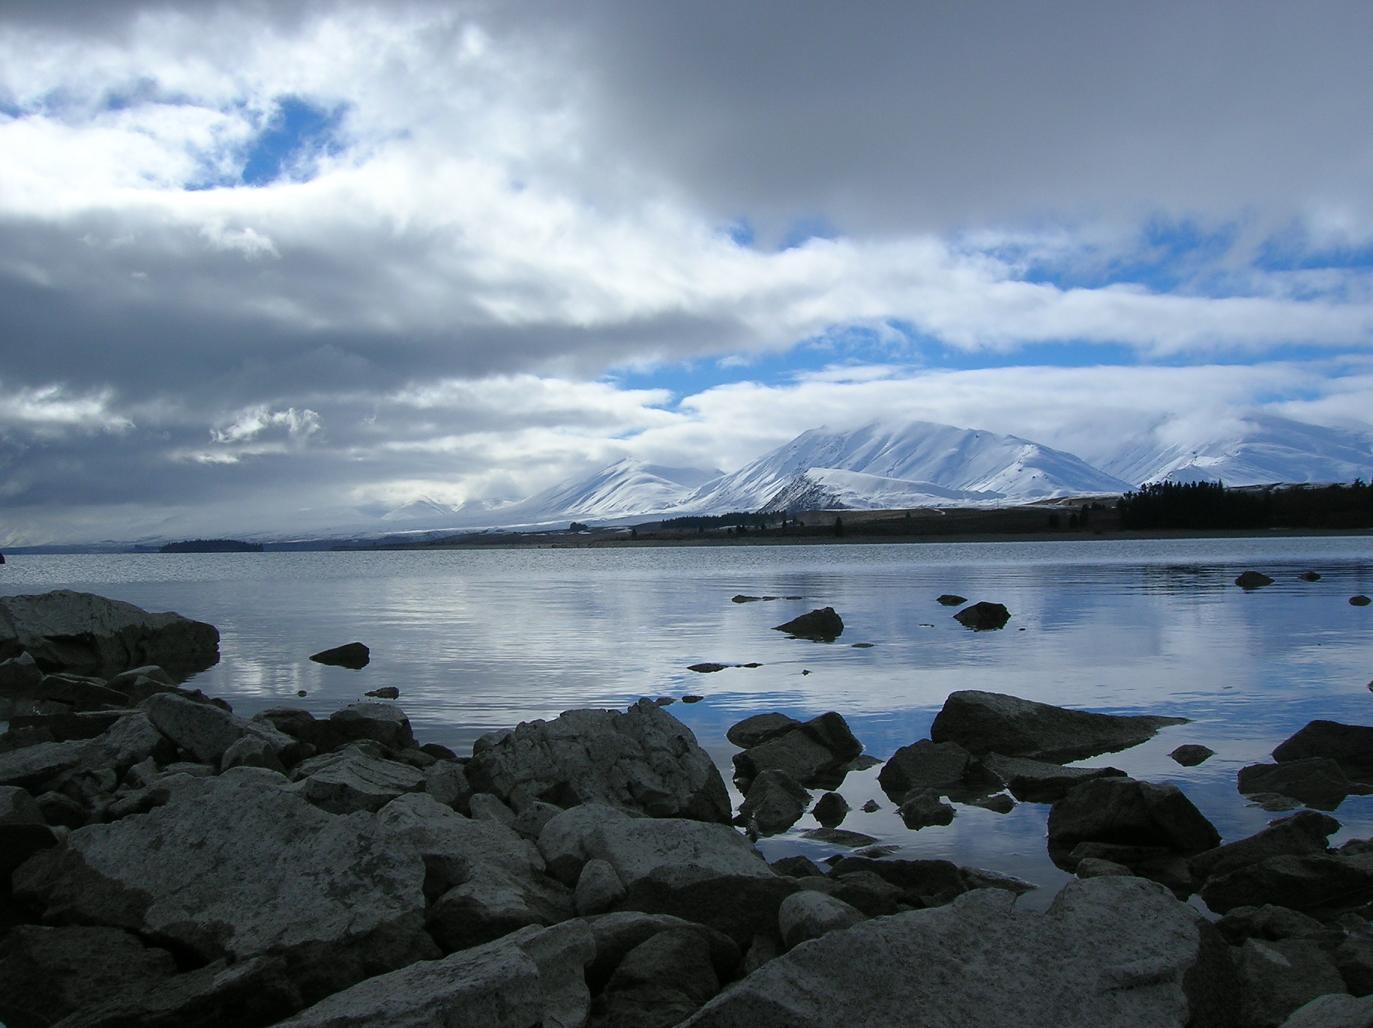 Lake Tekapo, am Fuße der Berge